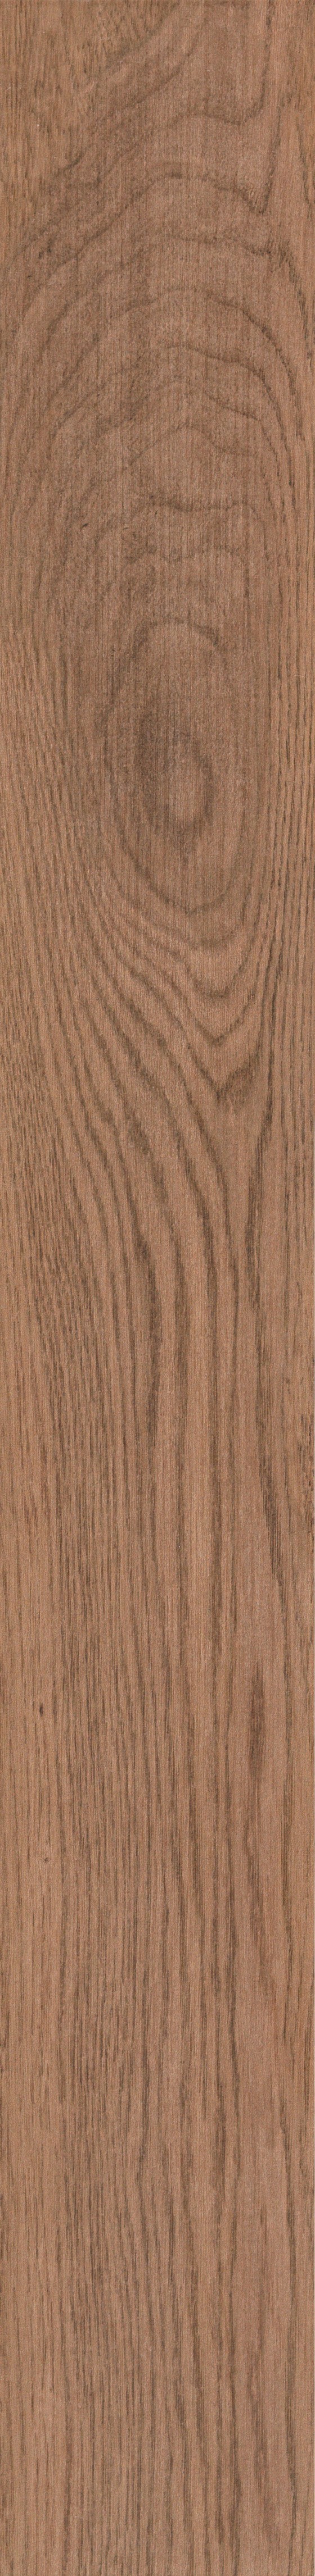 NB1064 Origini Marrone Wood Floor Tile 150x1200mm - 5.45m²